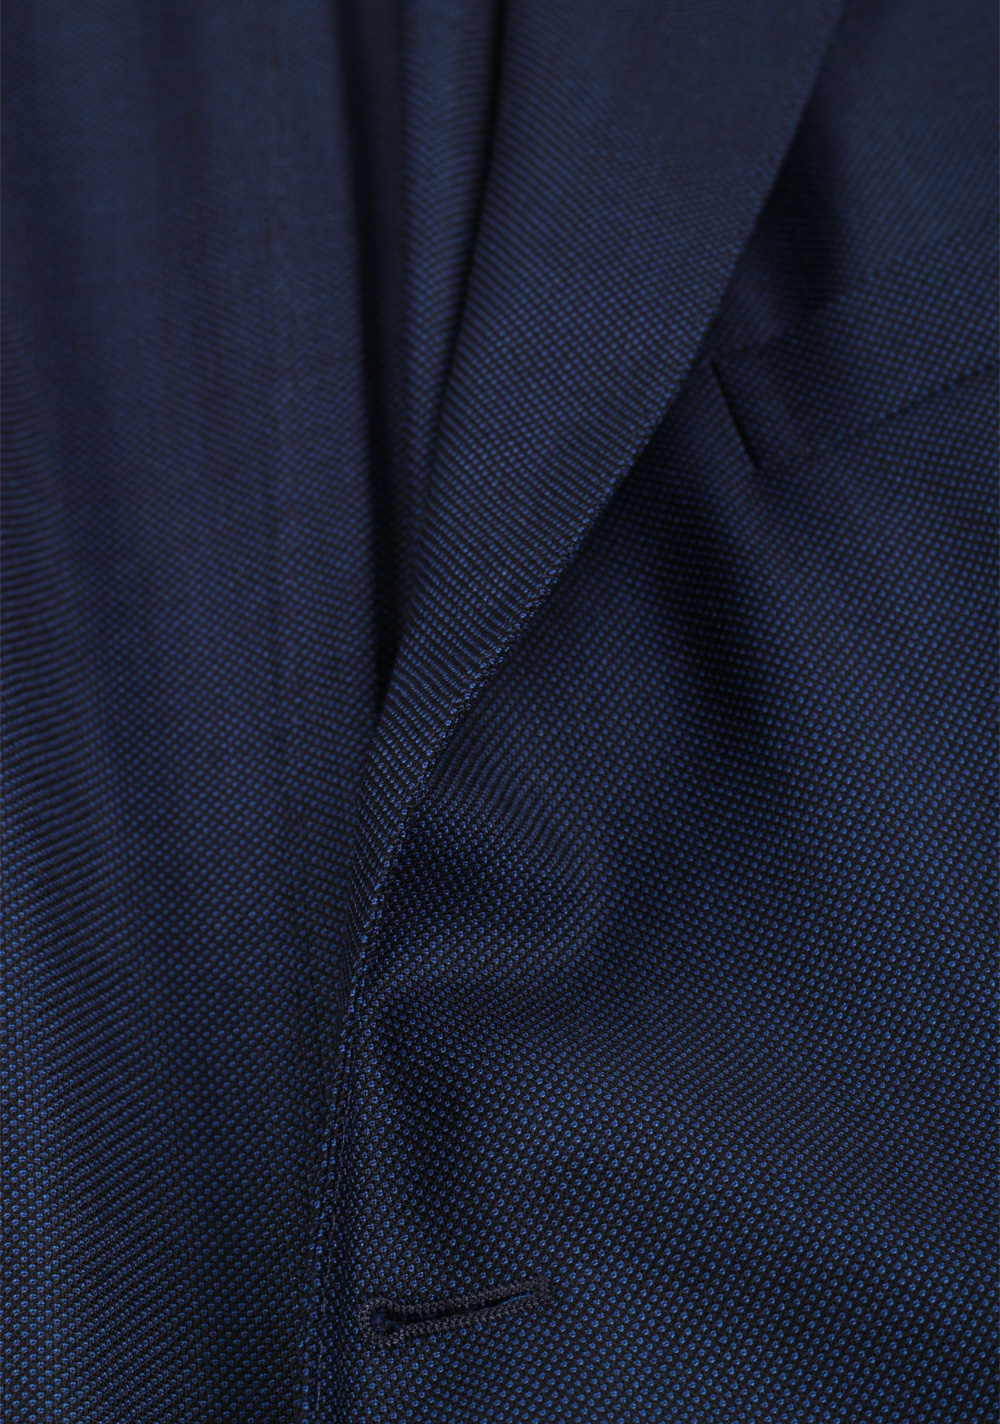 Boglioli K Jacket Blue Suit Size 56 / 46R U.S. | Costume Limité